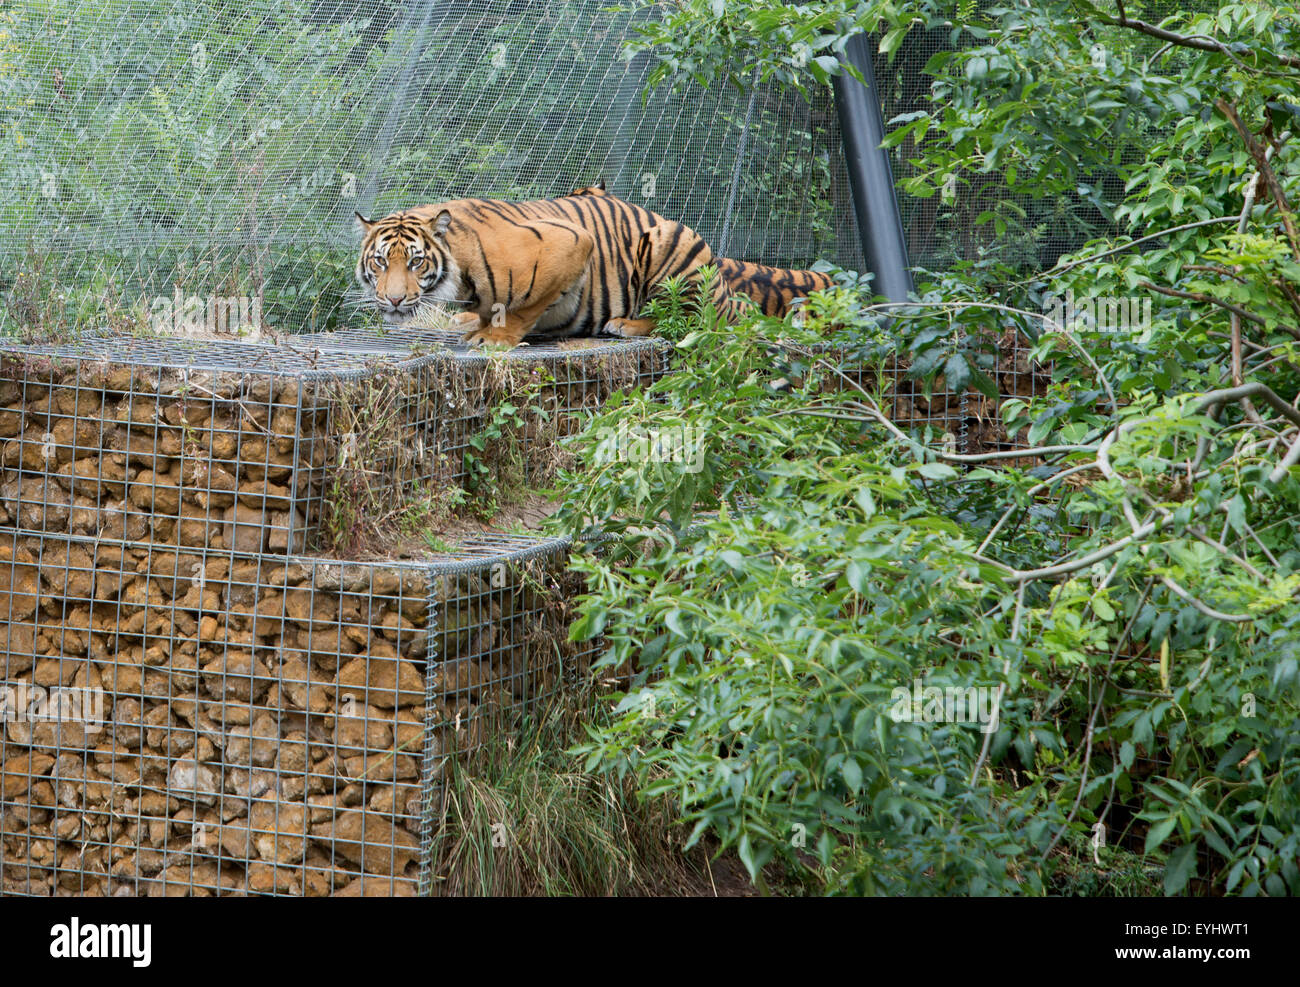 Sumatran tiger keeps watch from high wall in the Tiger Territory enclosure at London Zoo Stock Photo